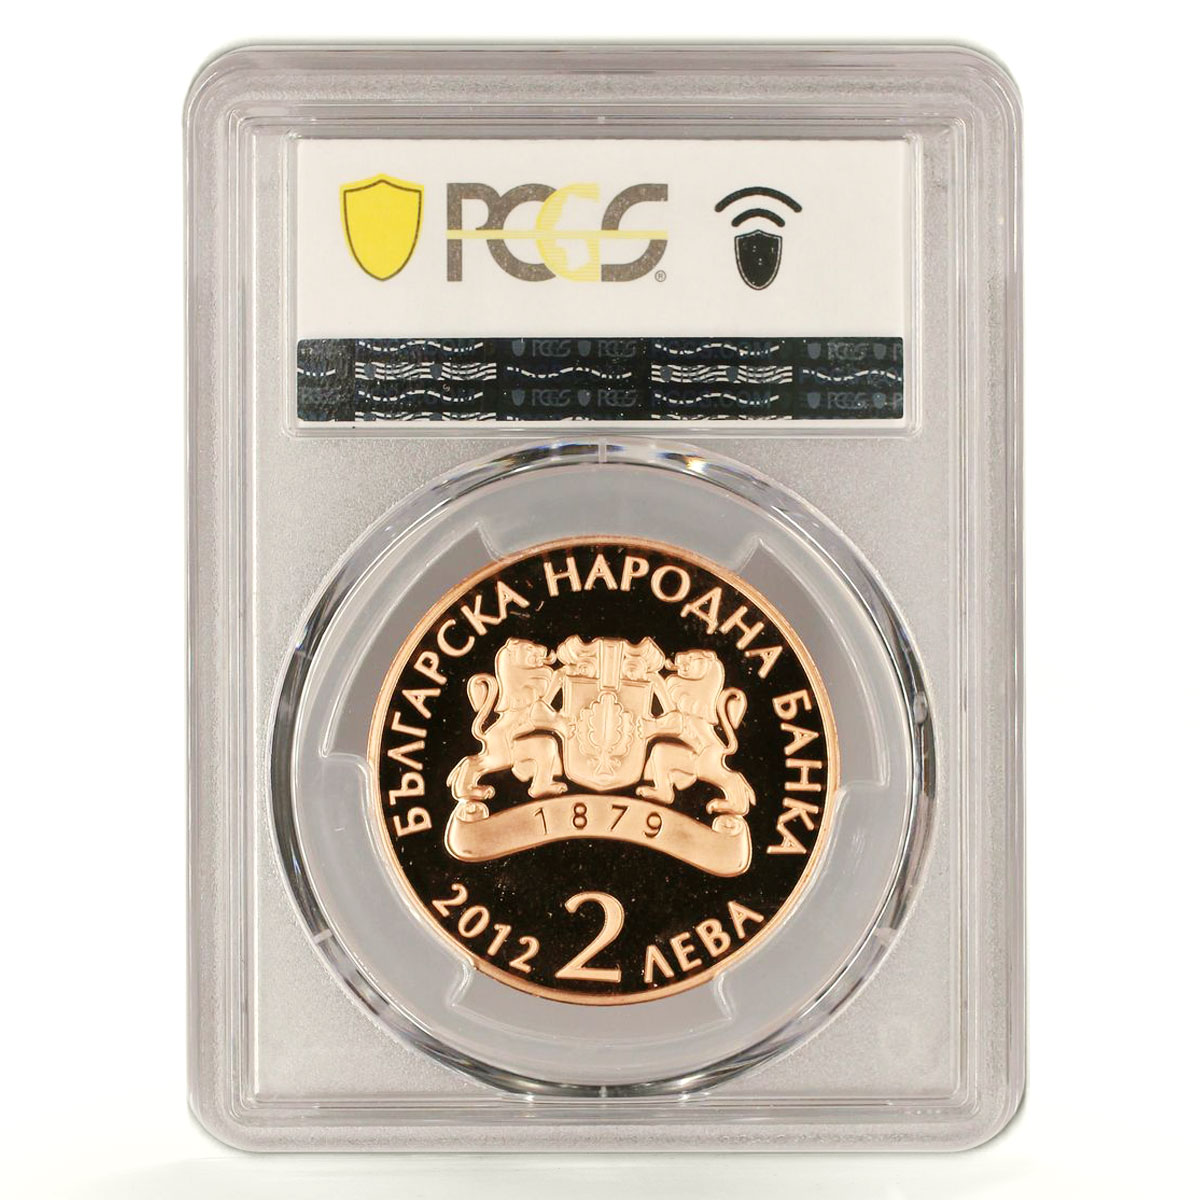 Bulgaria 2 leva Poet Dimcho Debelyanov Literature PR69 PCGS copper coin 2012